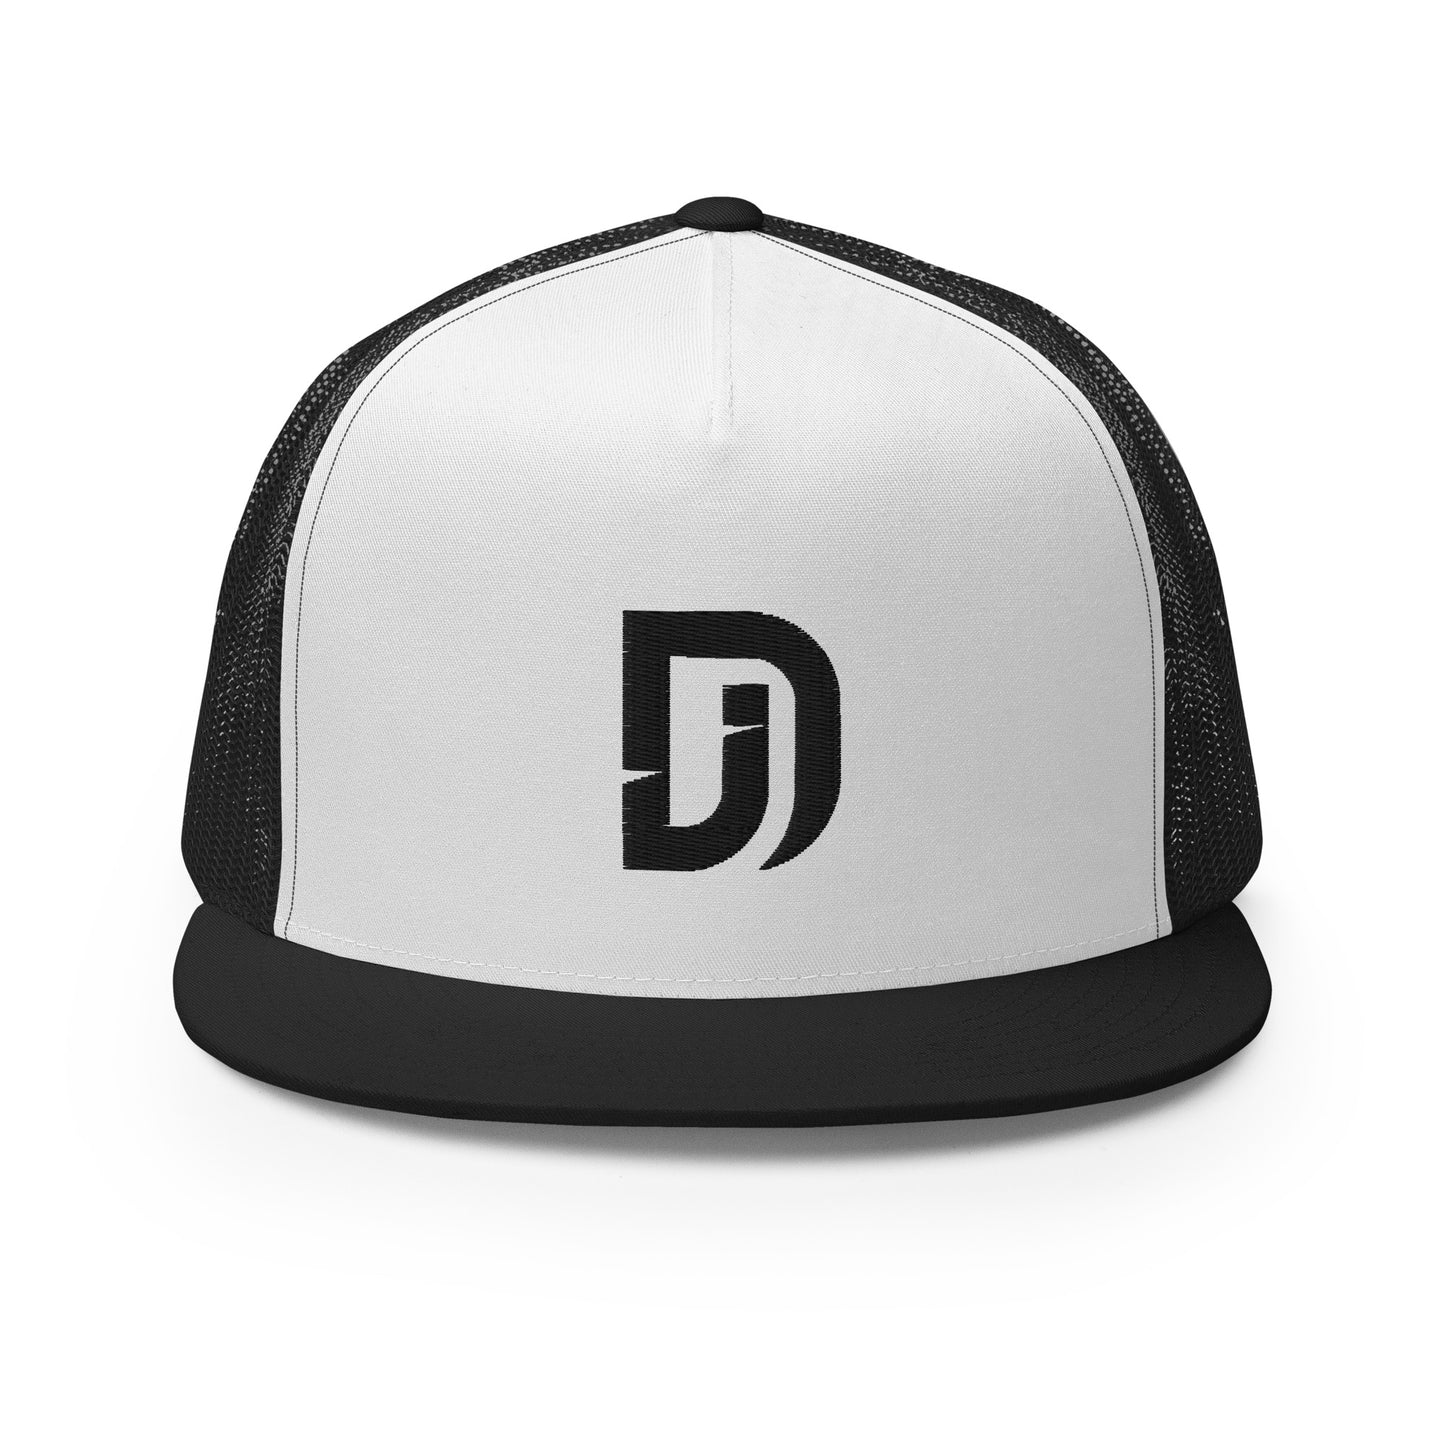 Dalyn Johnson "DJ" Trucker Cap